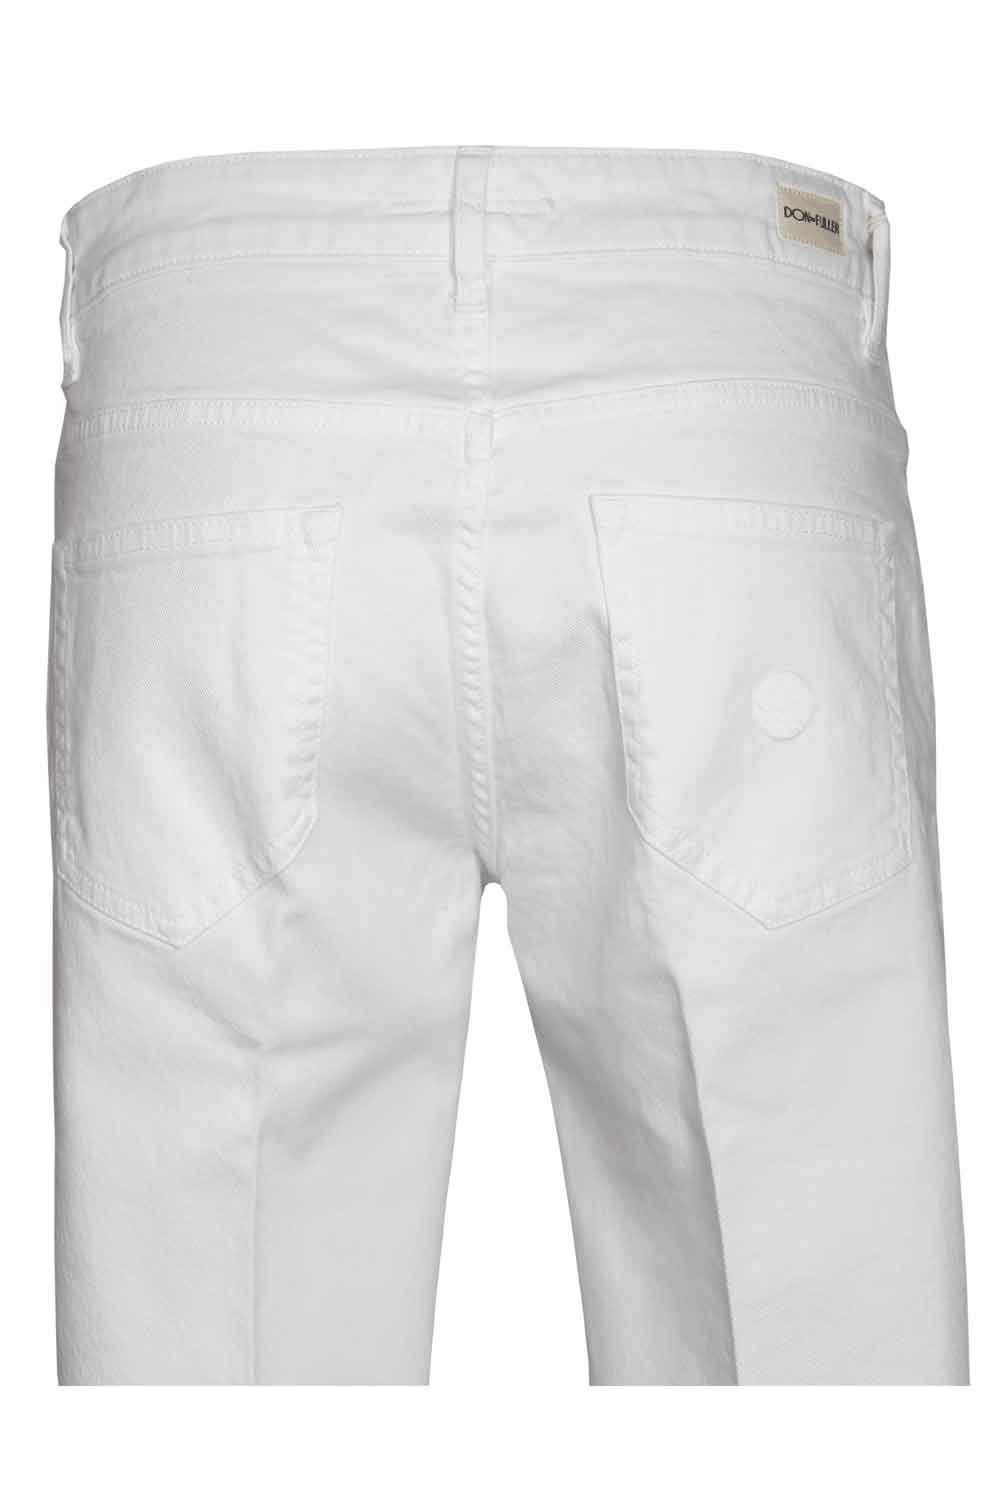 Pantalone bianco- DON THE FULLER Jeans DON THE FULLER   